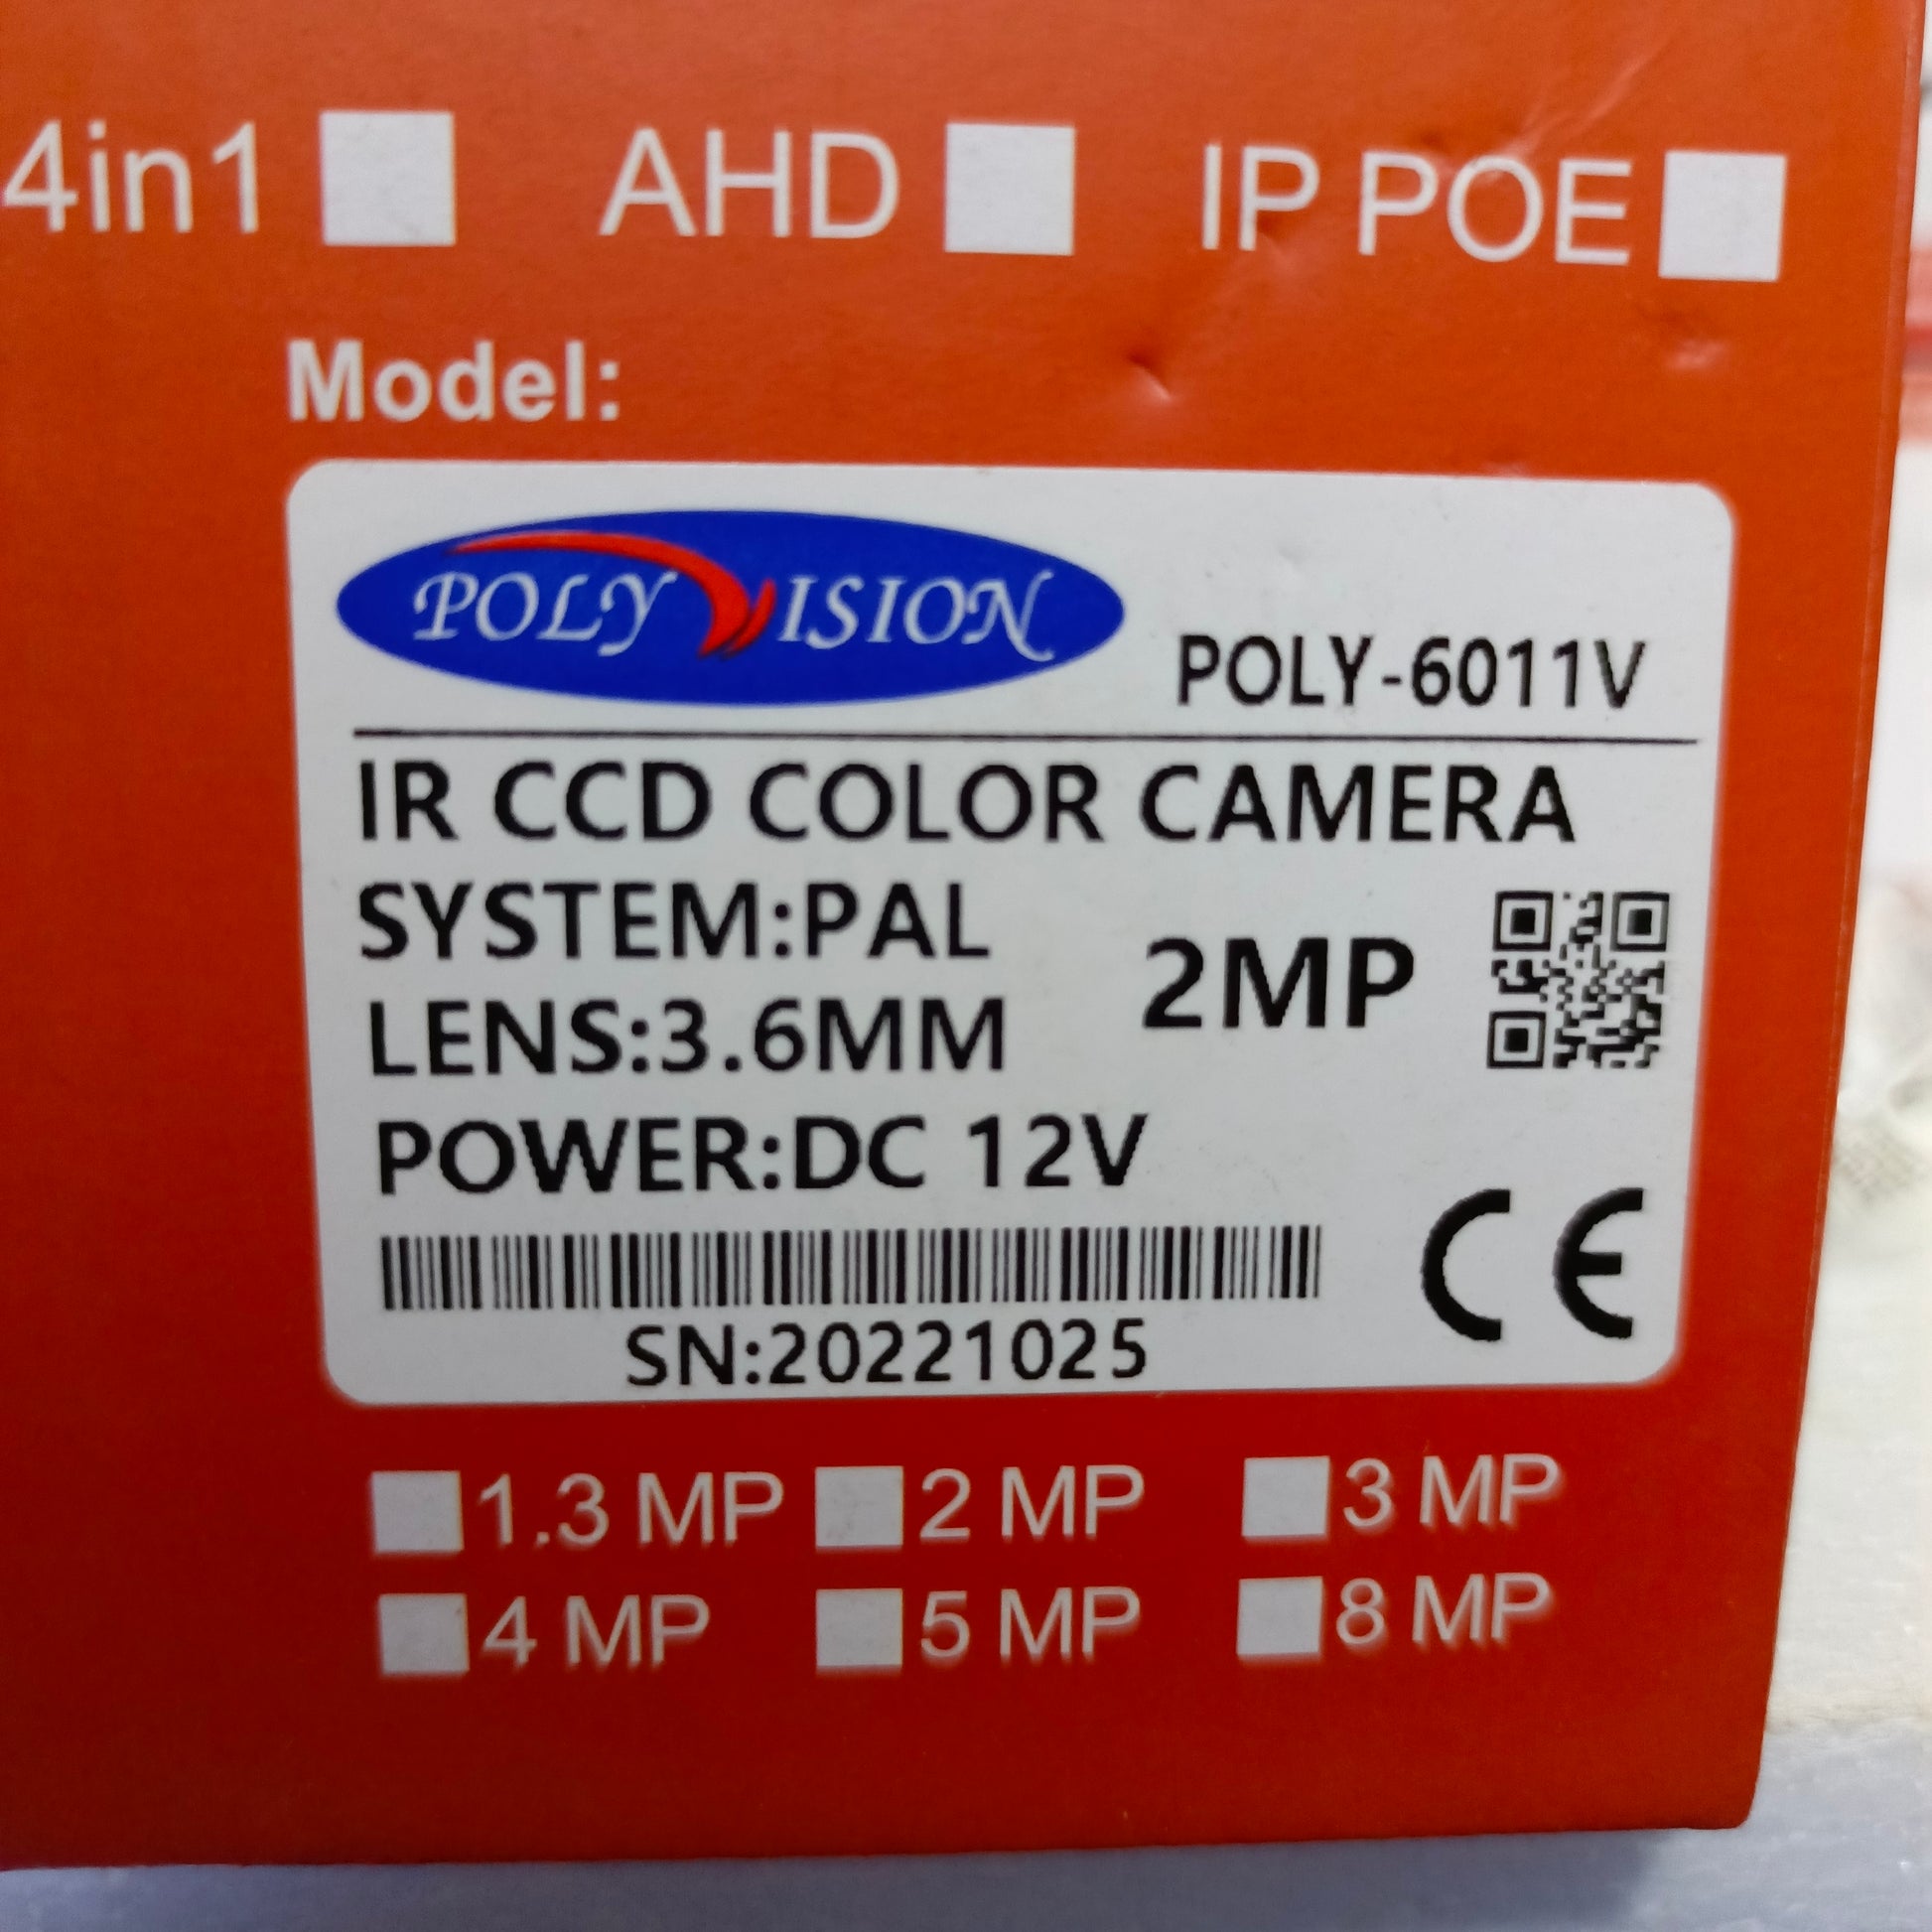 POLYVISION POLY-6011V IR-CCD Full Color Bullet Camera (3.6mm 2MP Lens) - model number sticker